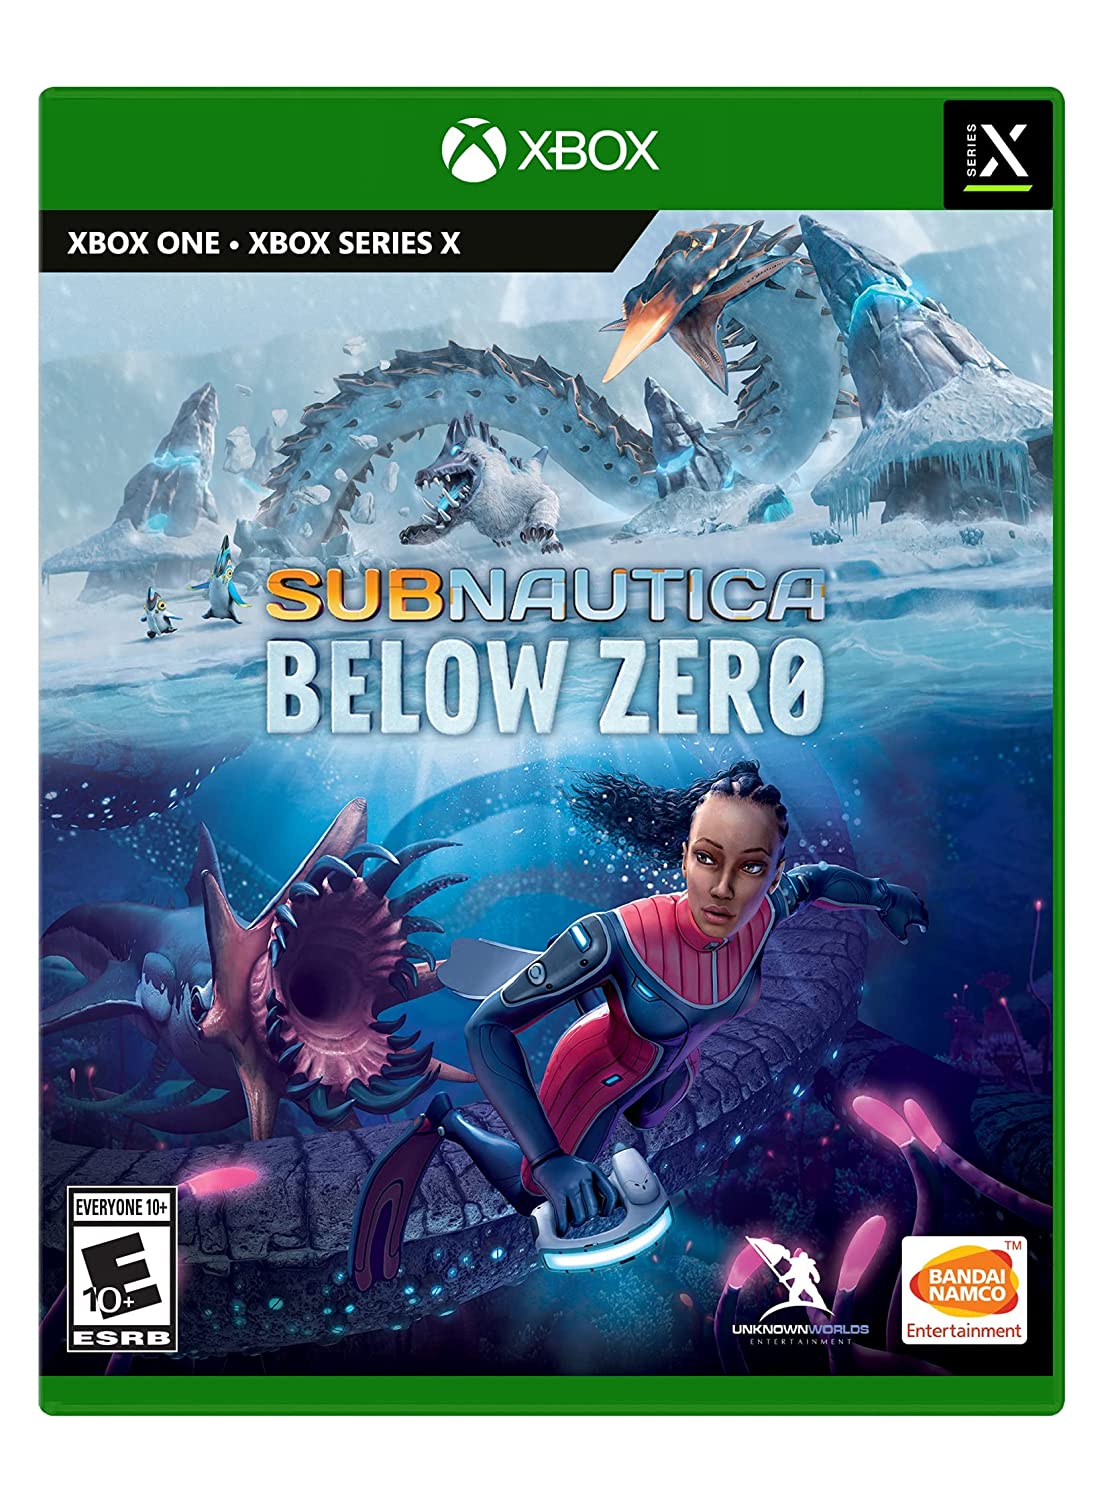 Subnautica: Below Zero for Bandai namco, Xbox One, Xbox Series X, 722674240055 - image 1 of 3